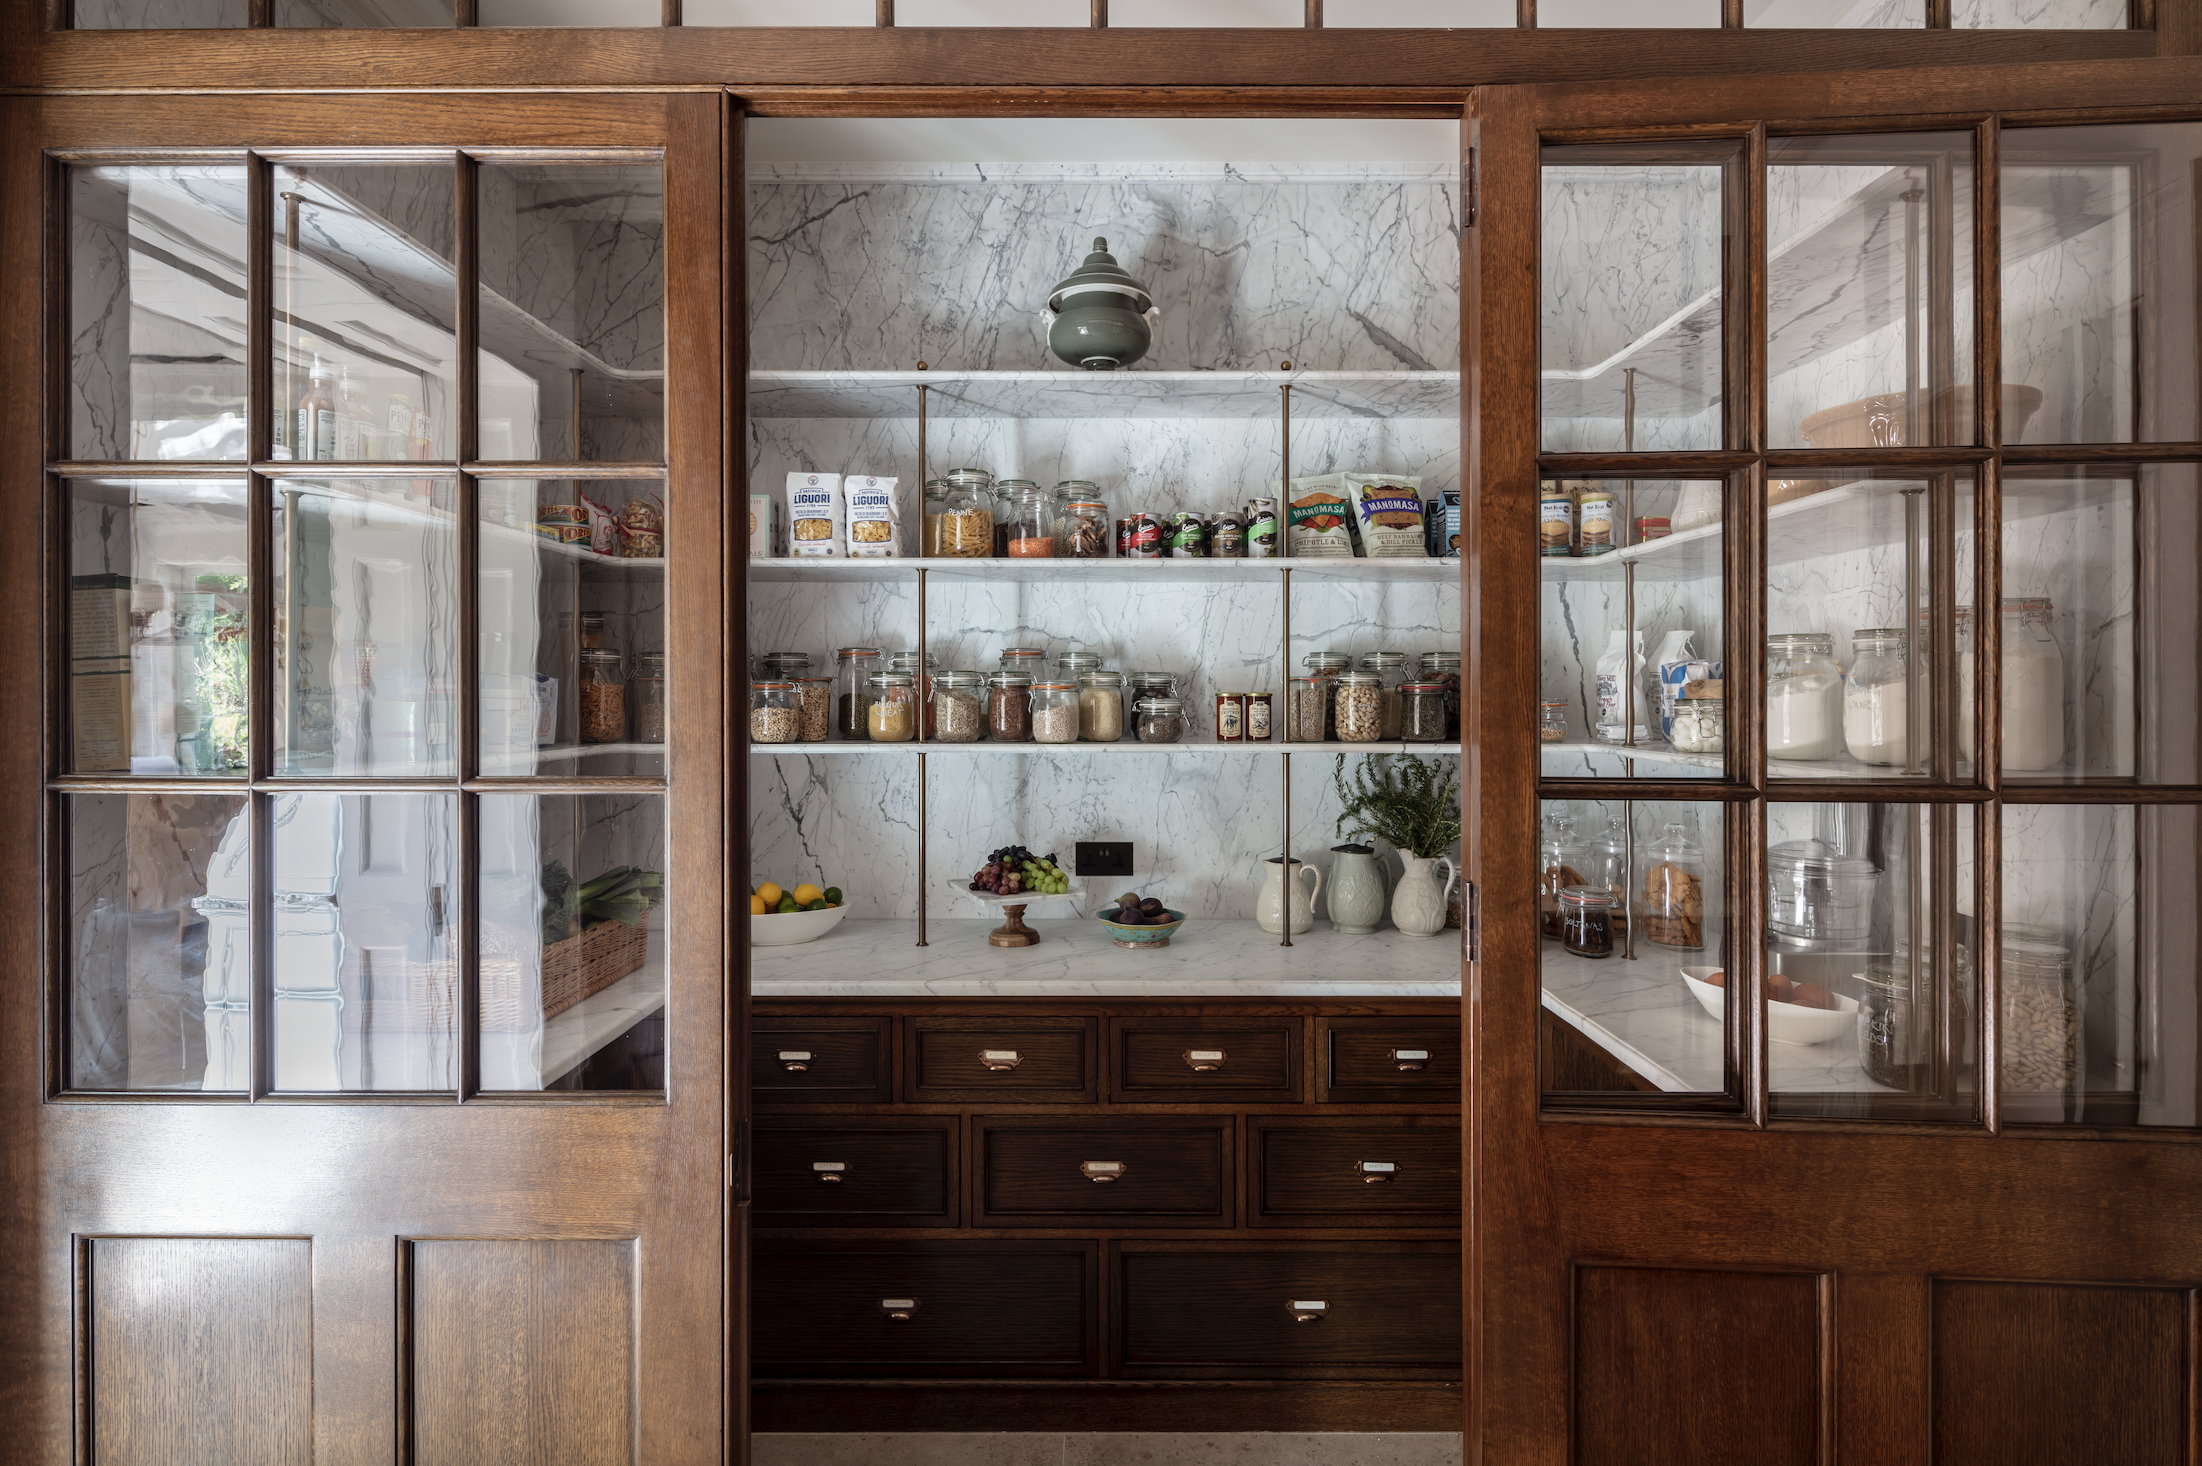 13 Awe-Worthy Kitchen Cabinet Organization Ideas